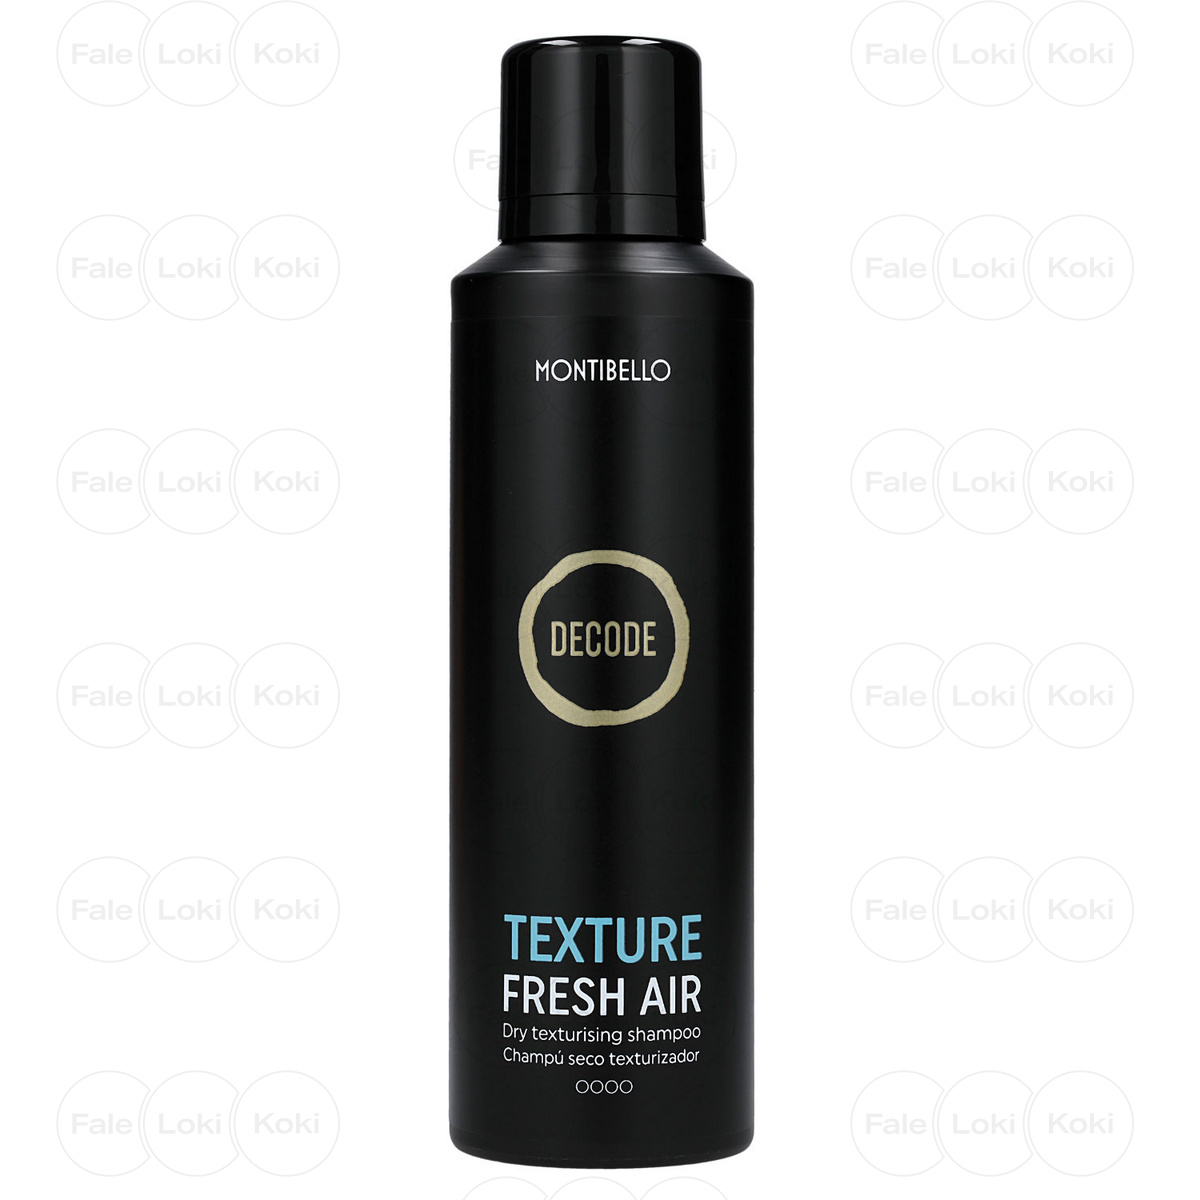 MONTIBELLO DECODE suchy szampon do włosów Texture Fresh Air 200 ml